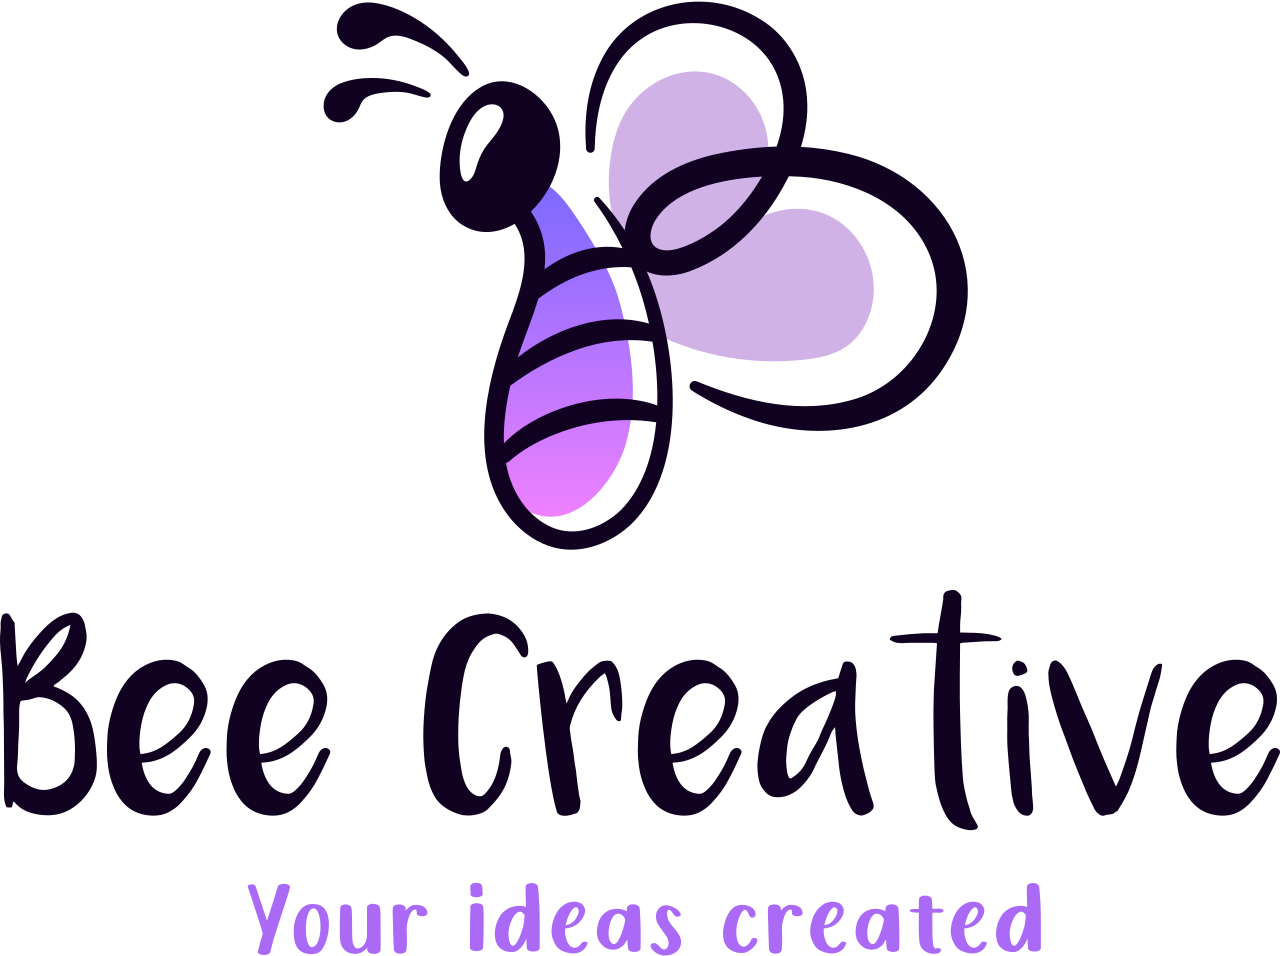 Bee Creative's logo